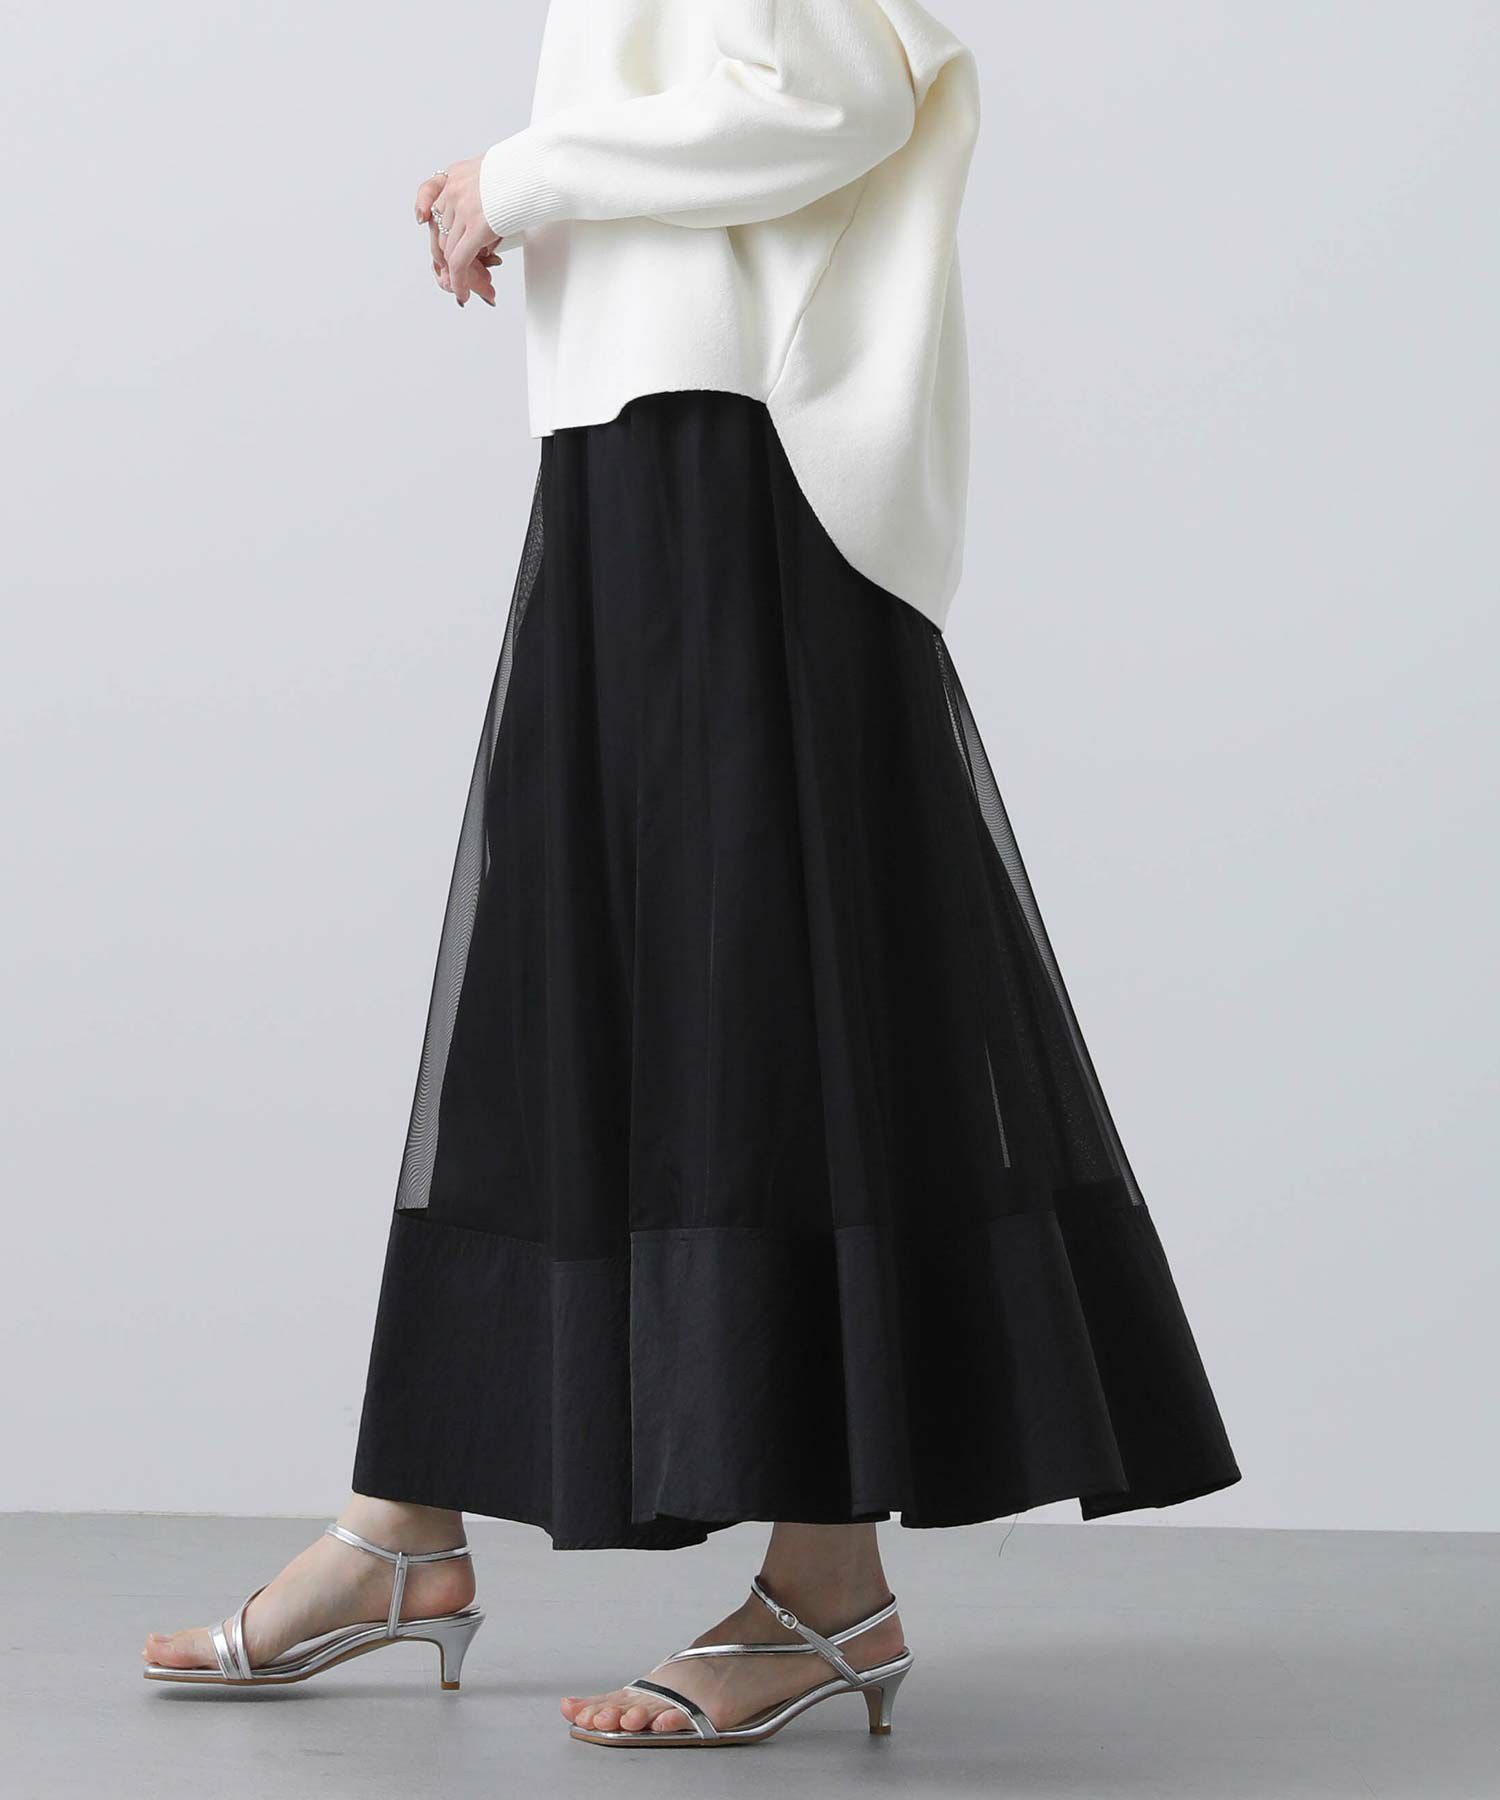 Gready Brilliantギャザーチュール裾切替スカート | SEKIMIKI Online